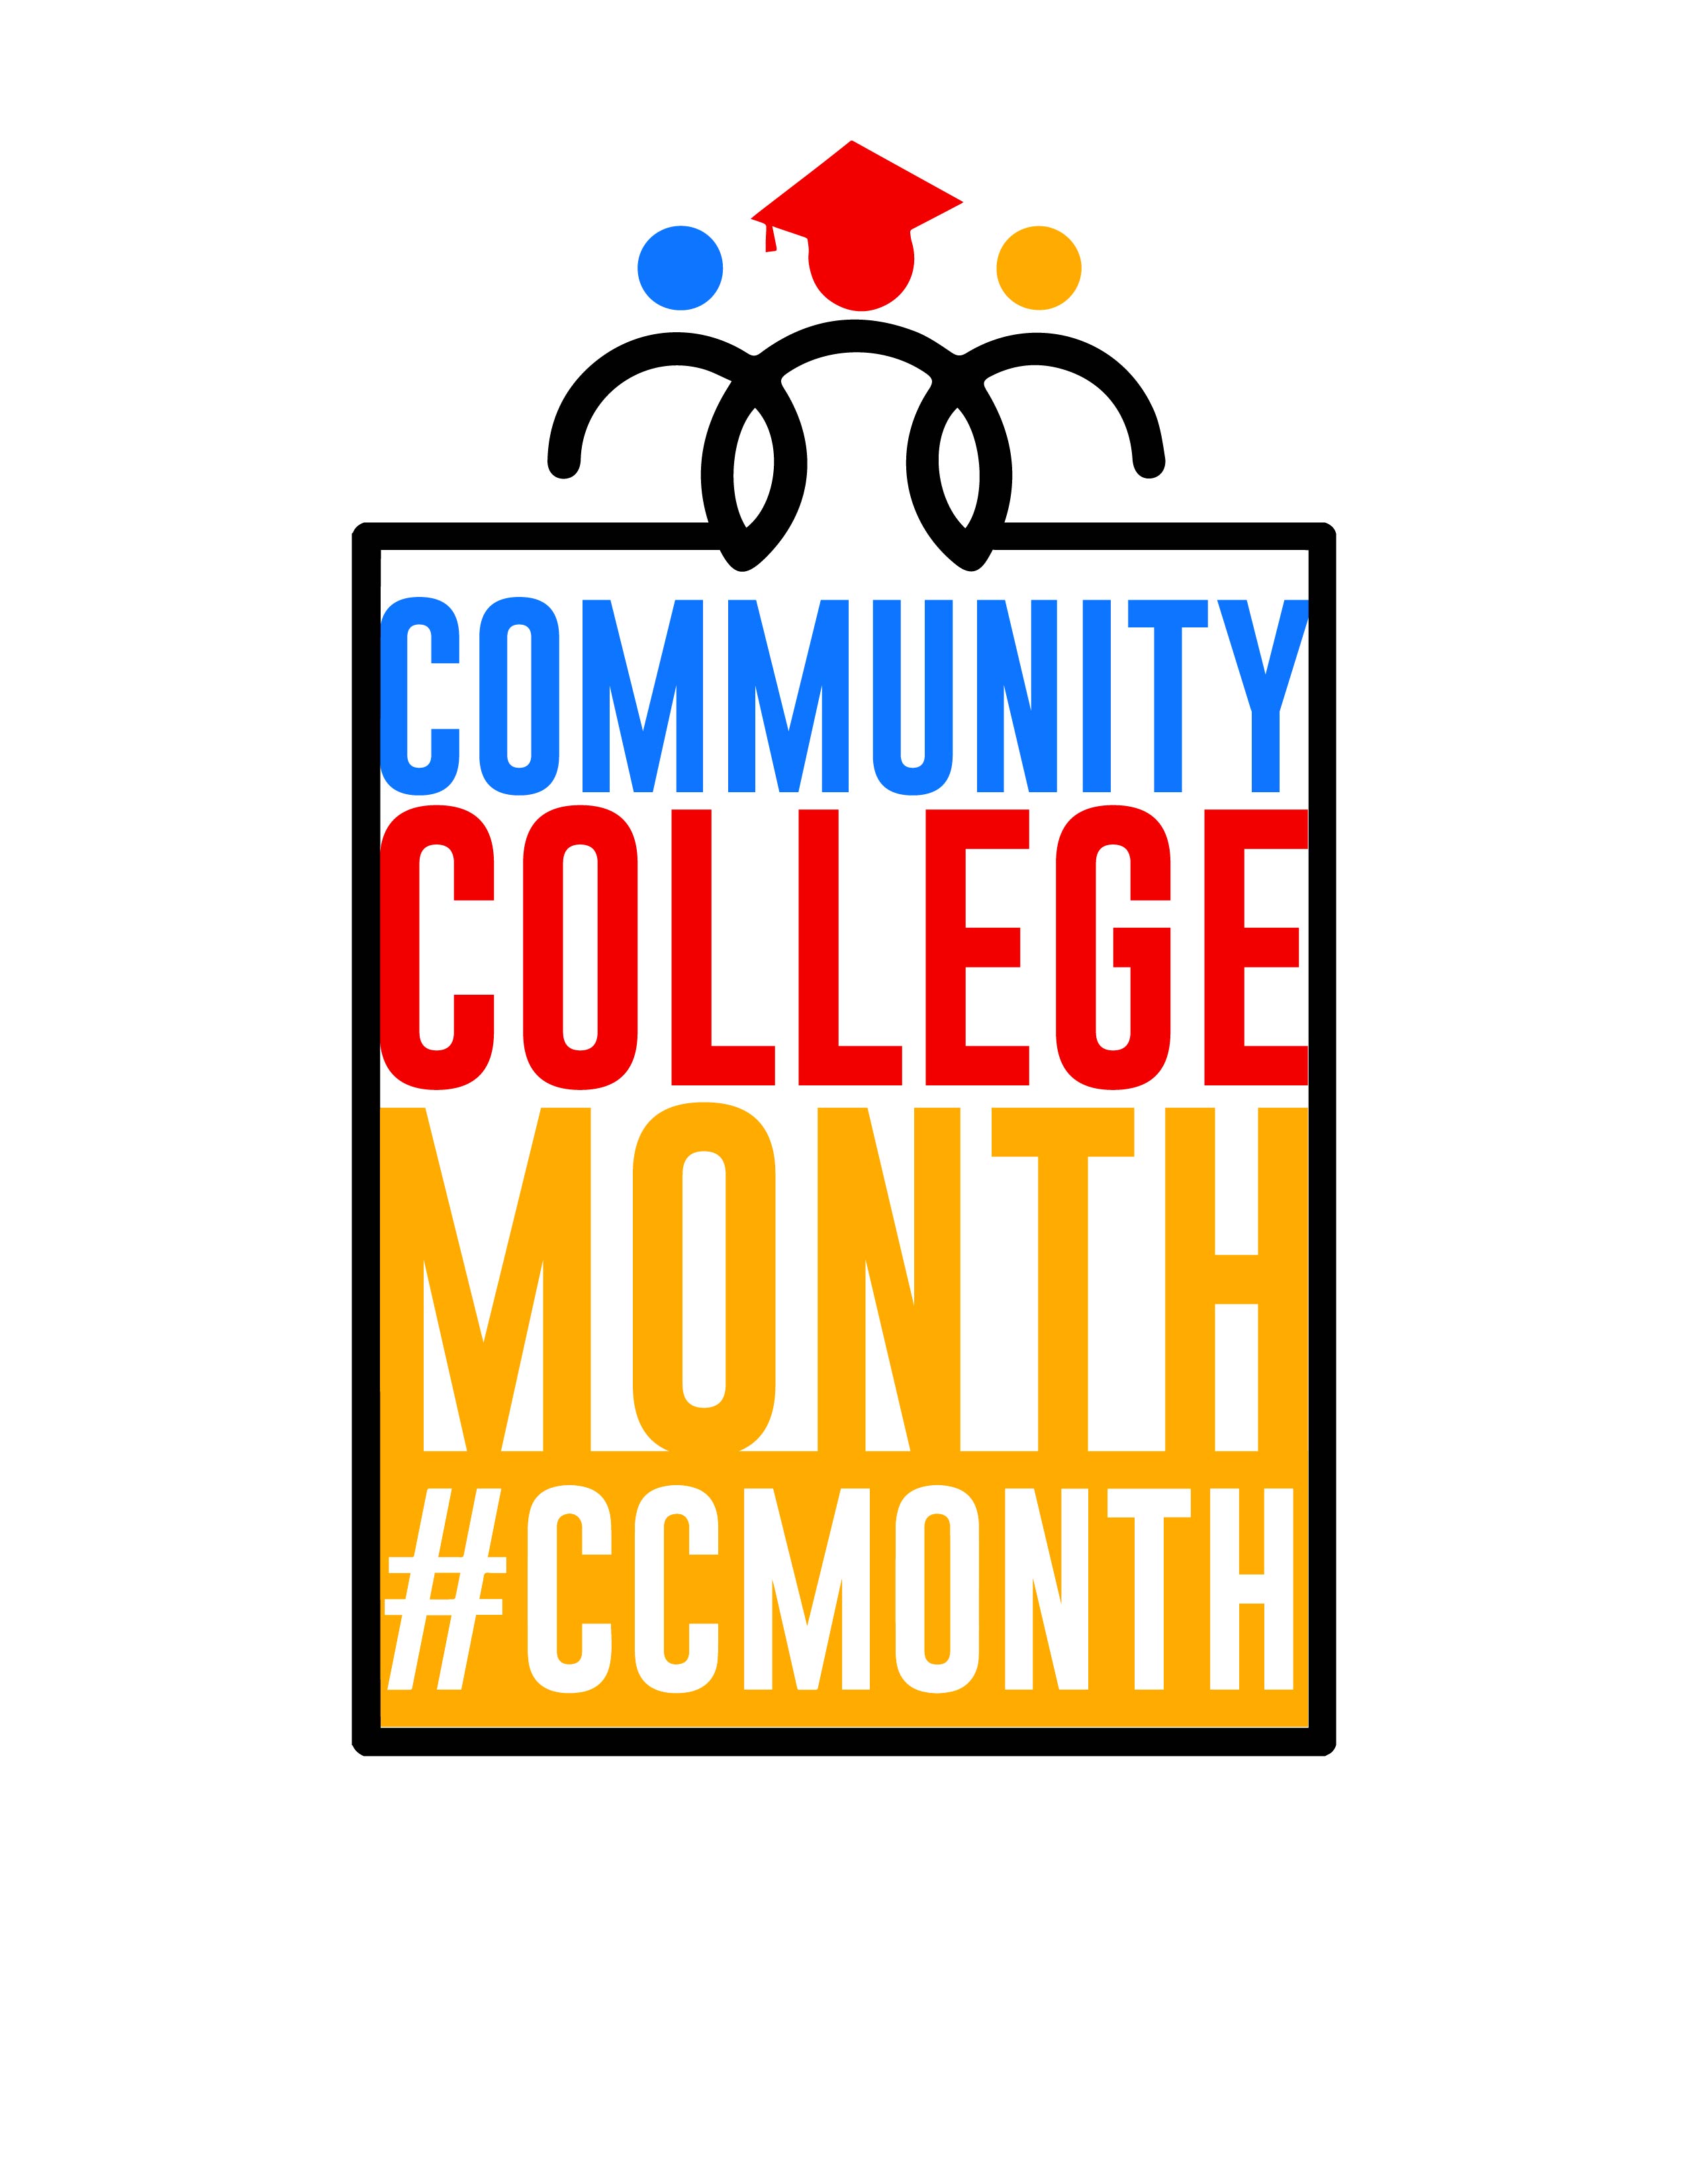 Community College Month logo